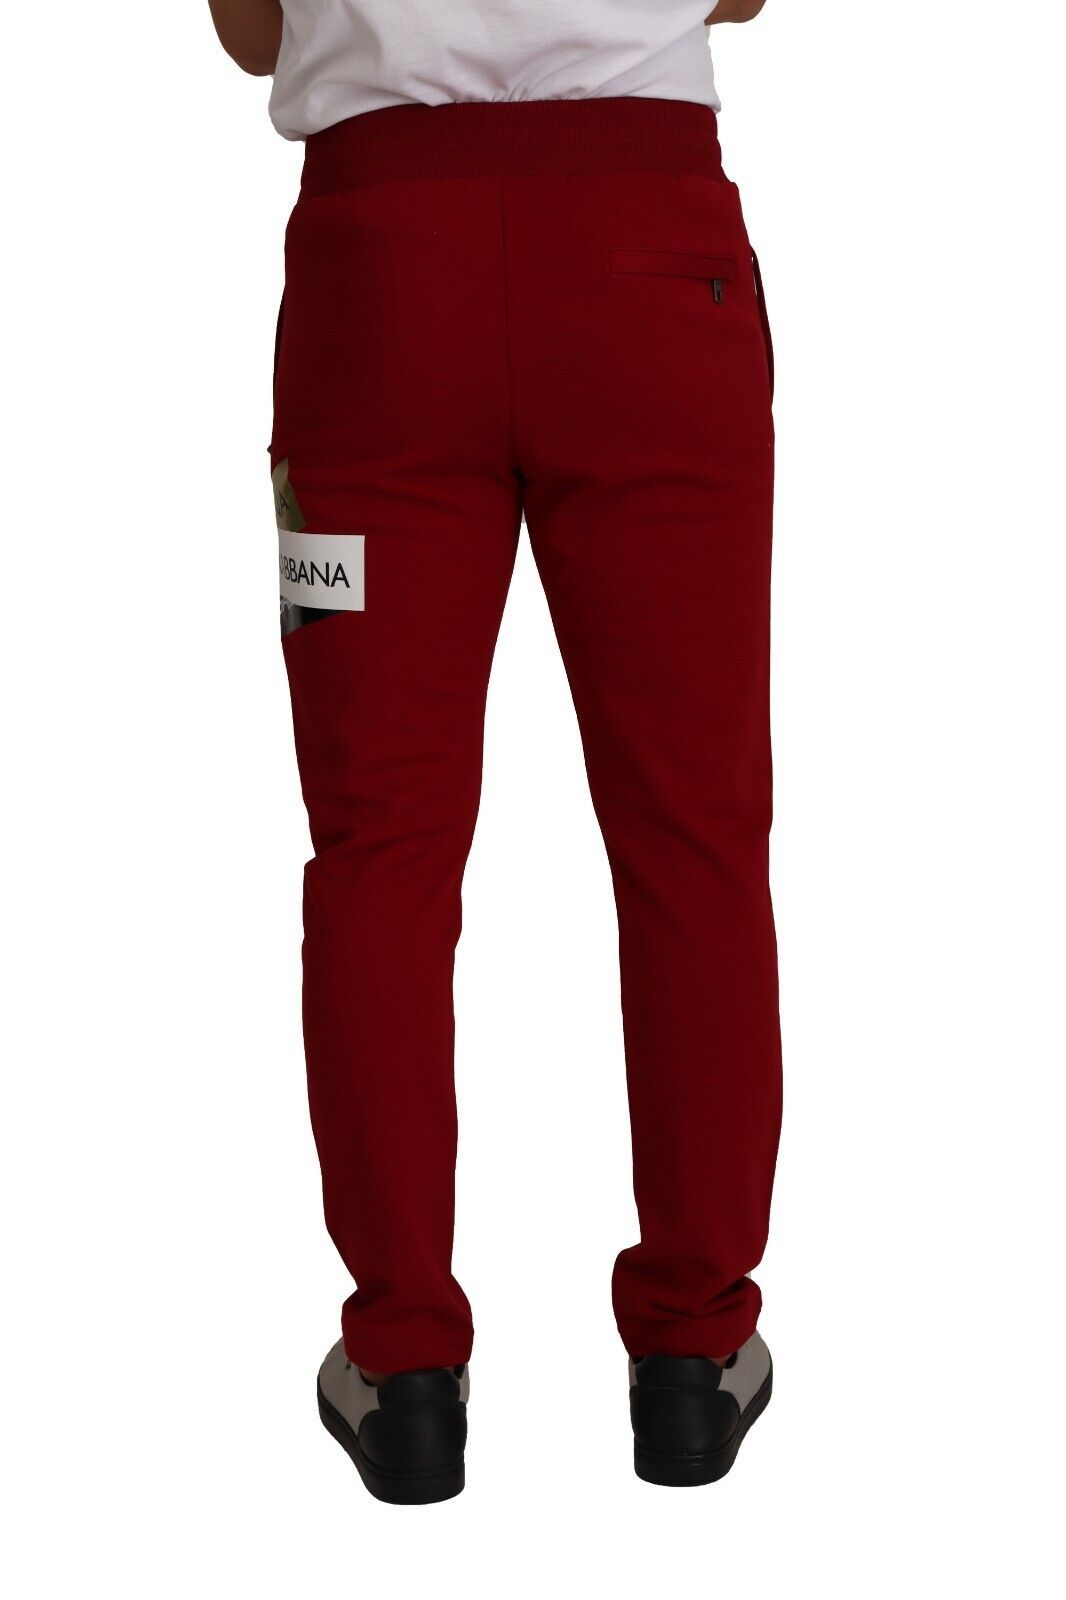 Dolce &amp; Gabbana Red Cotton Logo Patch Sweatpants Панталони за джогинг